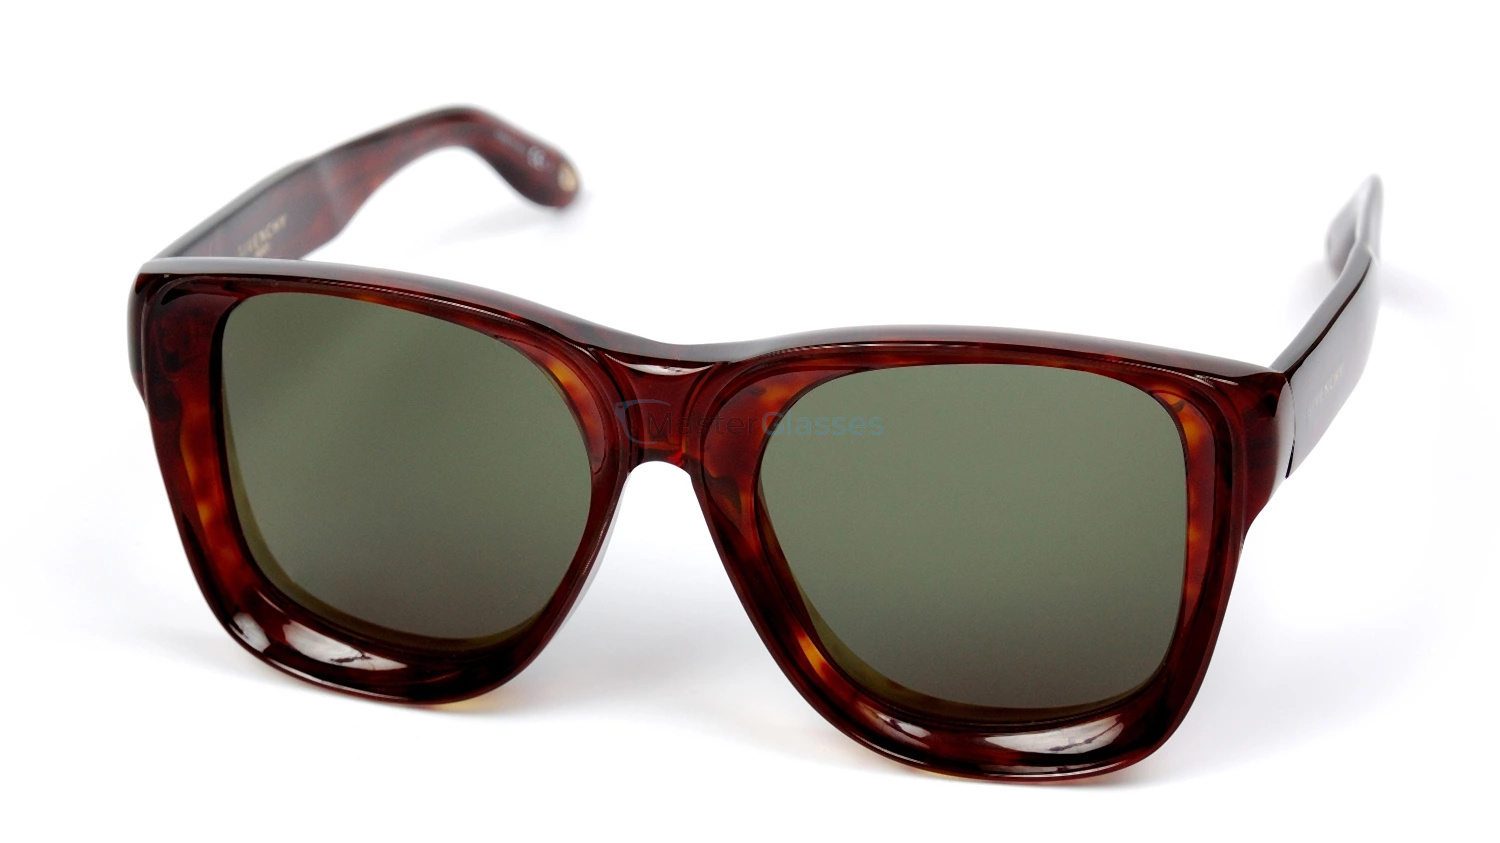 Gv7156s-86-qt очки. Очки унисекс дживанши. Givenchy Sunglasses GV 7212/S. Очки Givenchy 7201-s 086. Магазин солнцезащитных очков москва